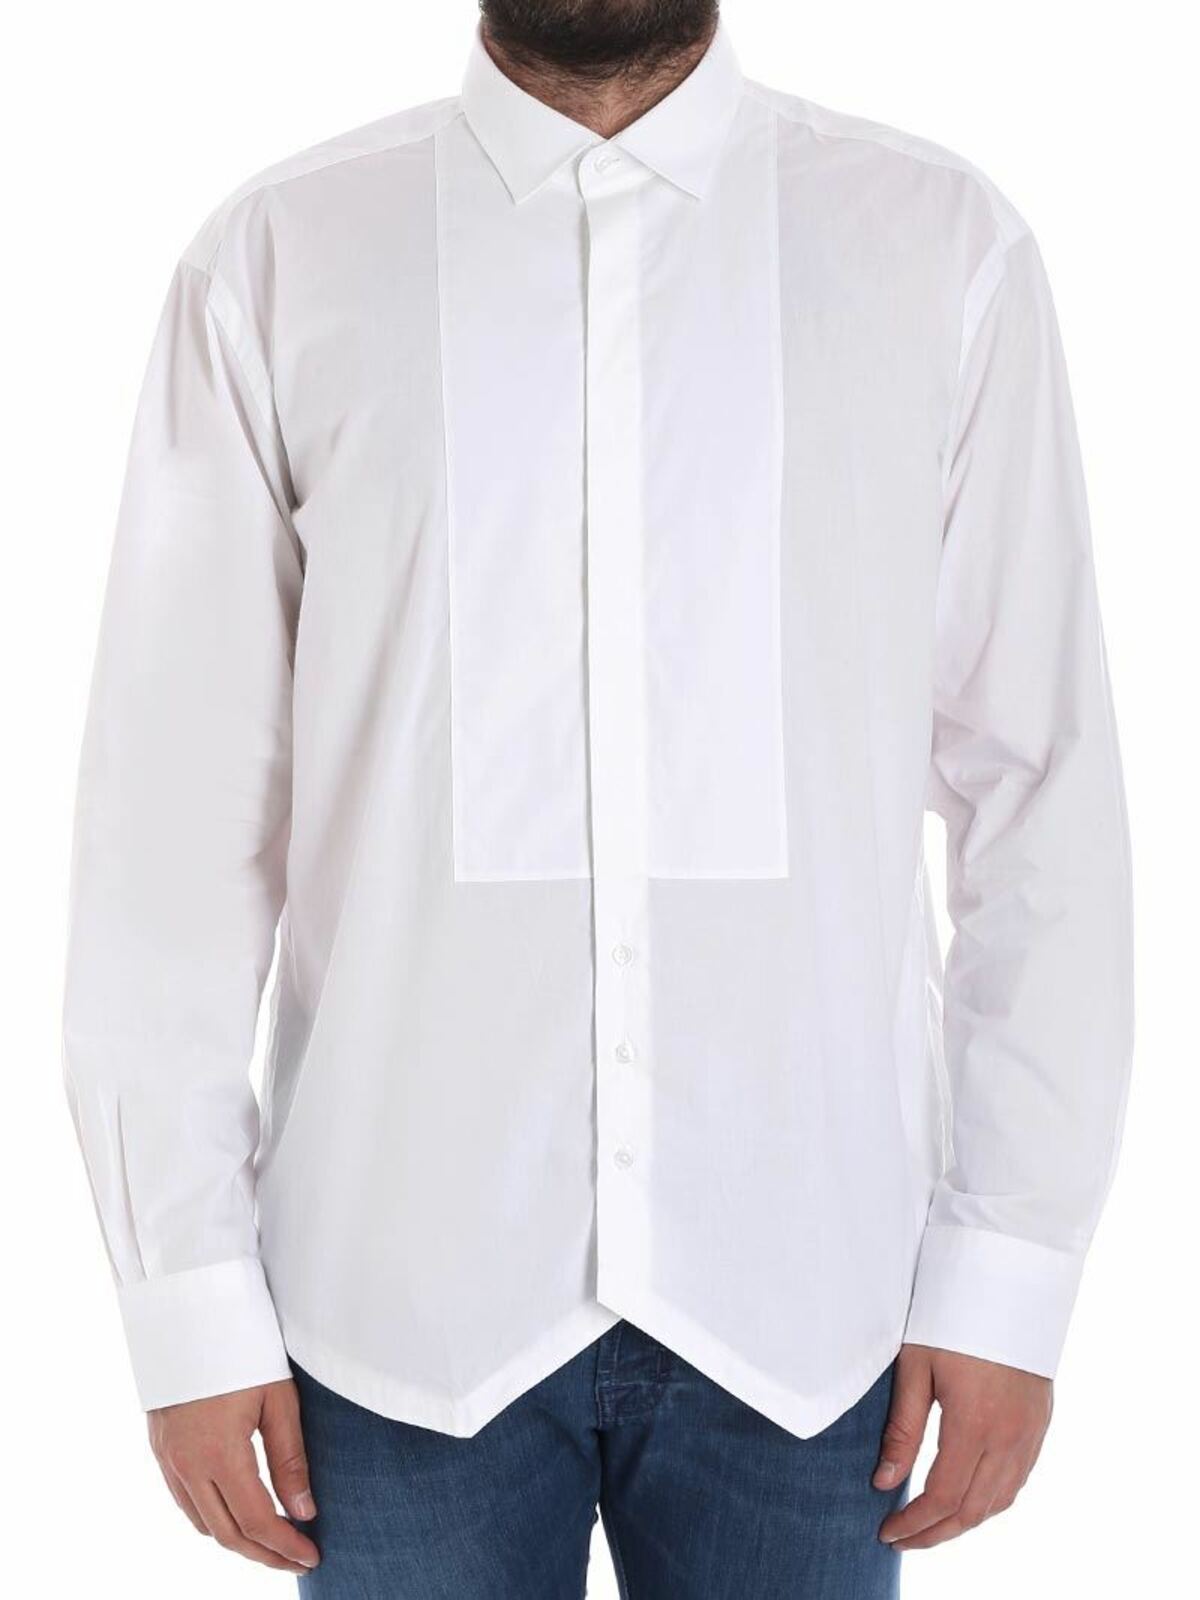 Karl Lagerfeld White Shirt With Plastron